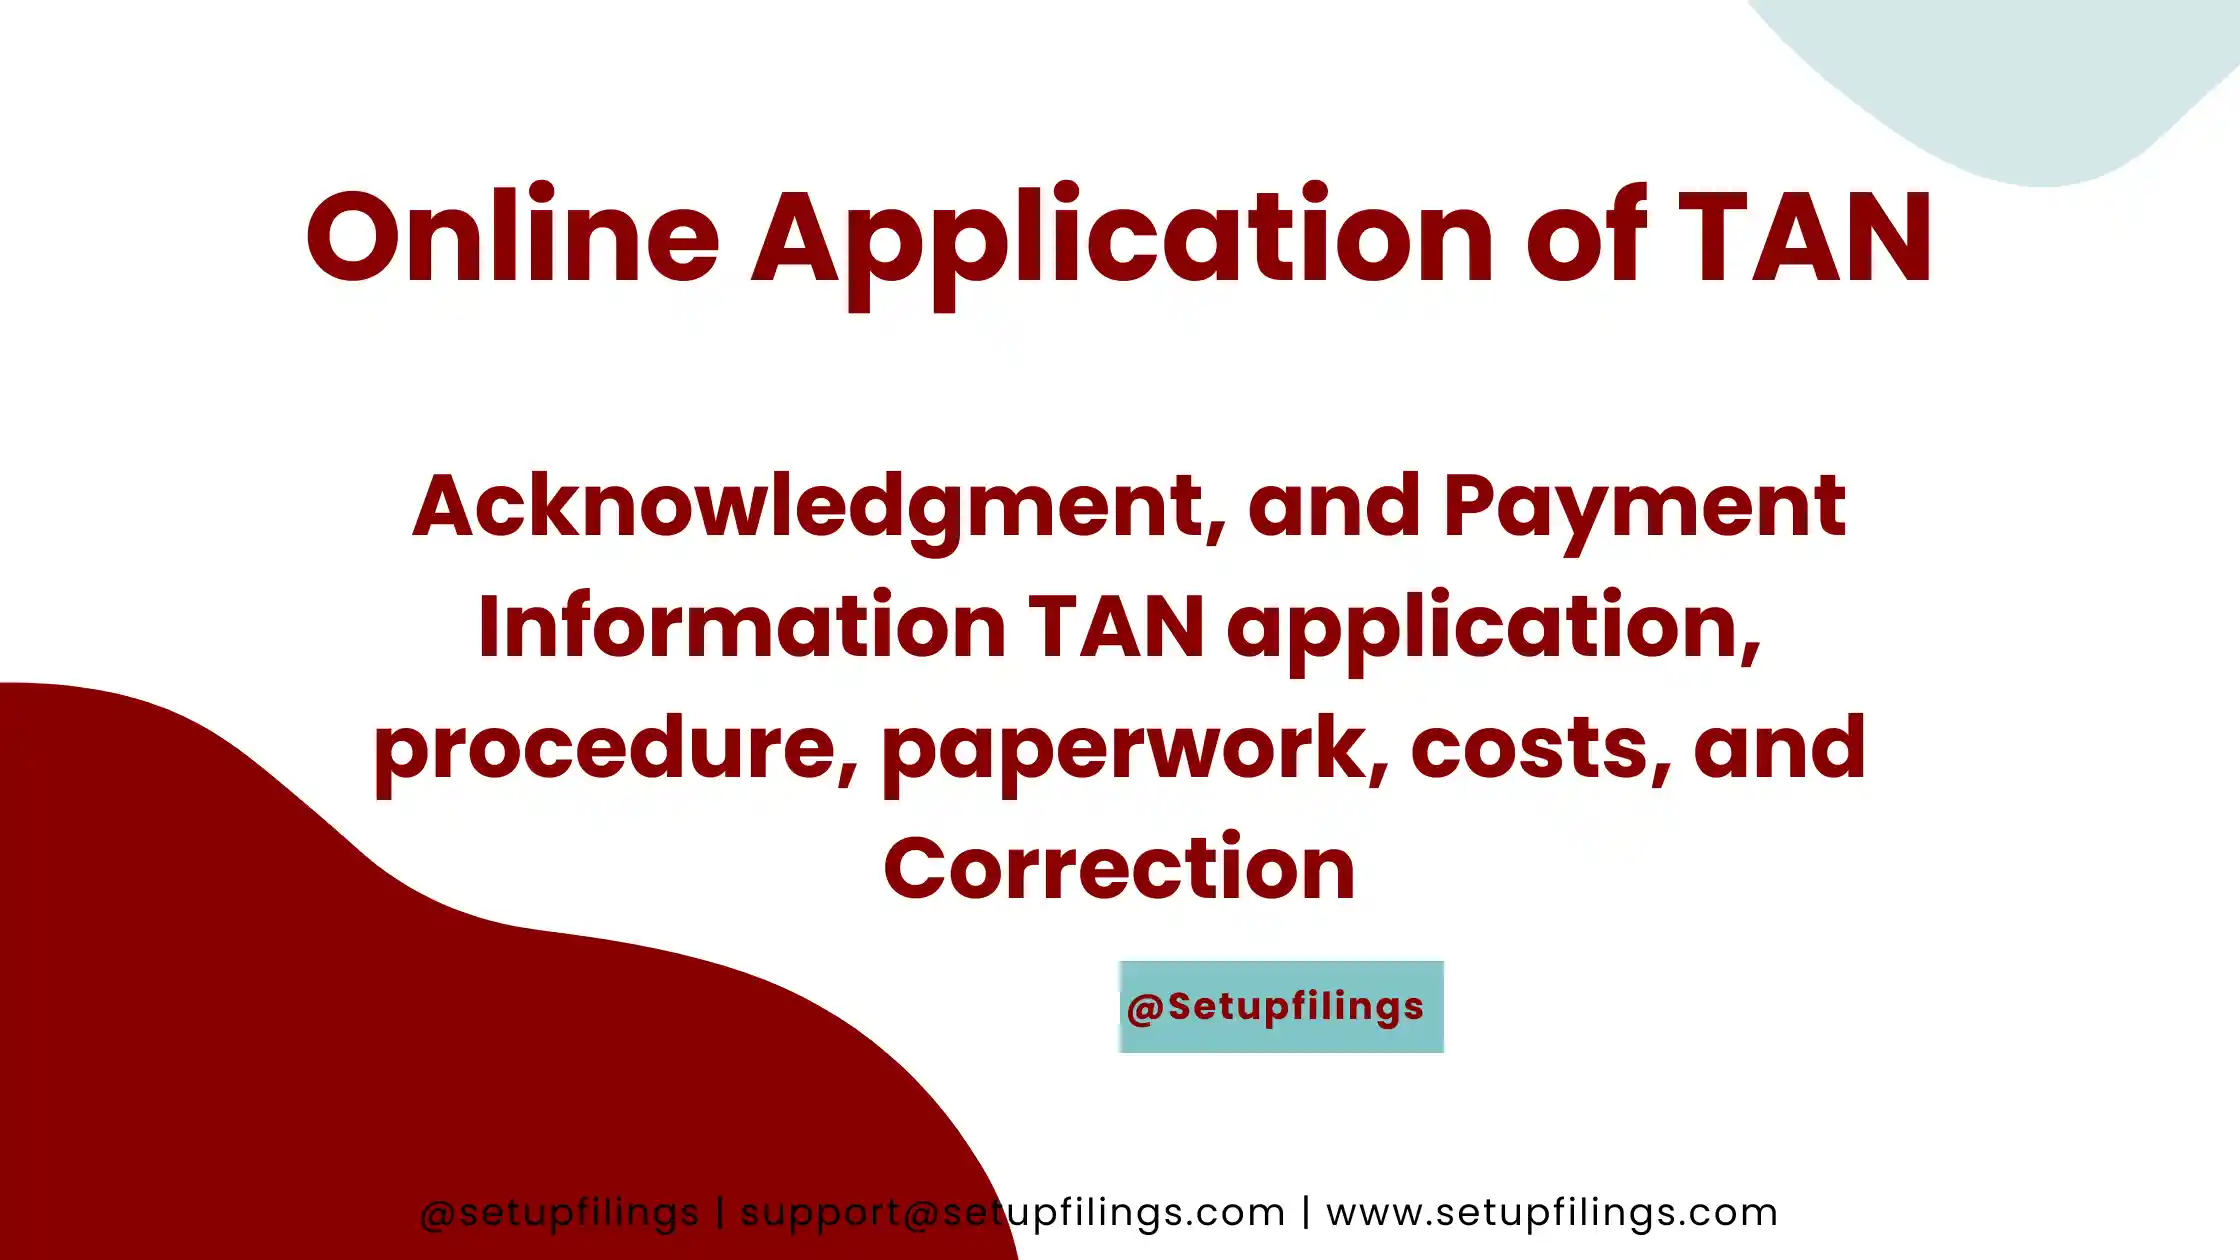 Online Application of TAN